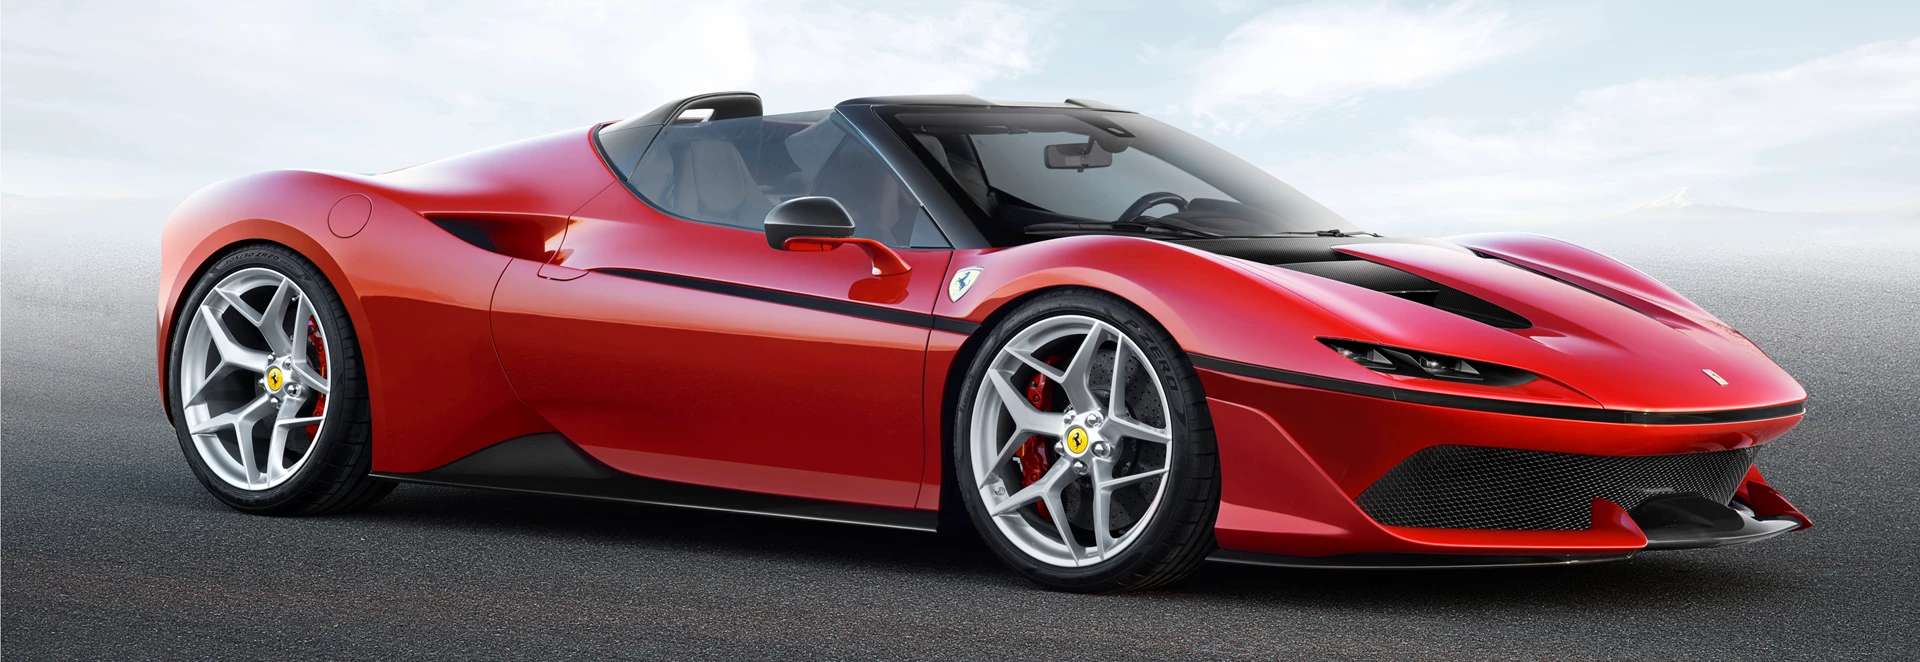 Ferrari wins the Red Dot Best of the Best design award again 